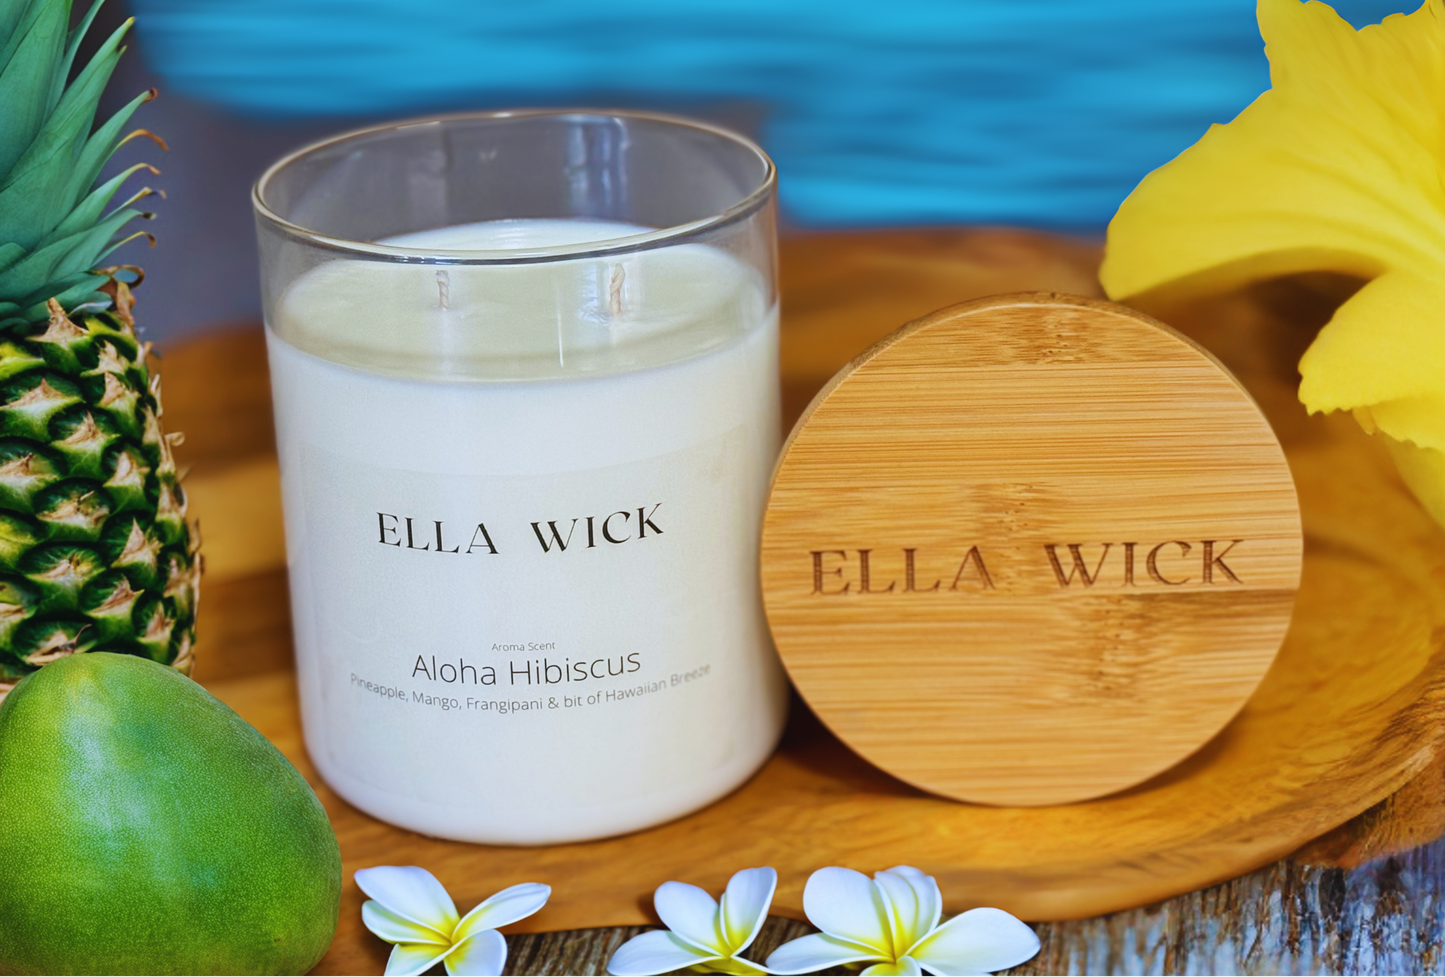 Aloha Hibiscus - Pineapple, Mango, Frangipani & bit of Hawaiian Breeze